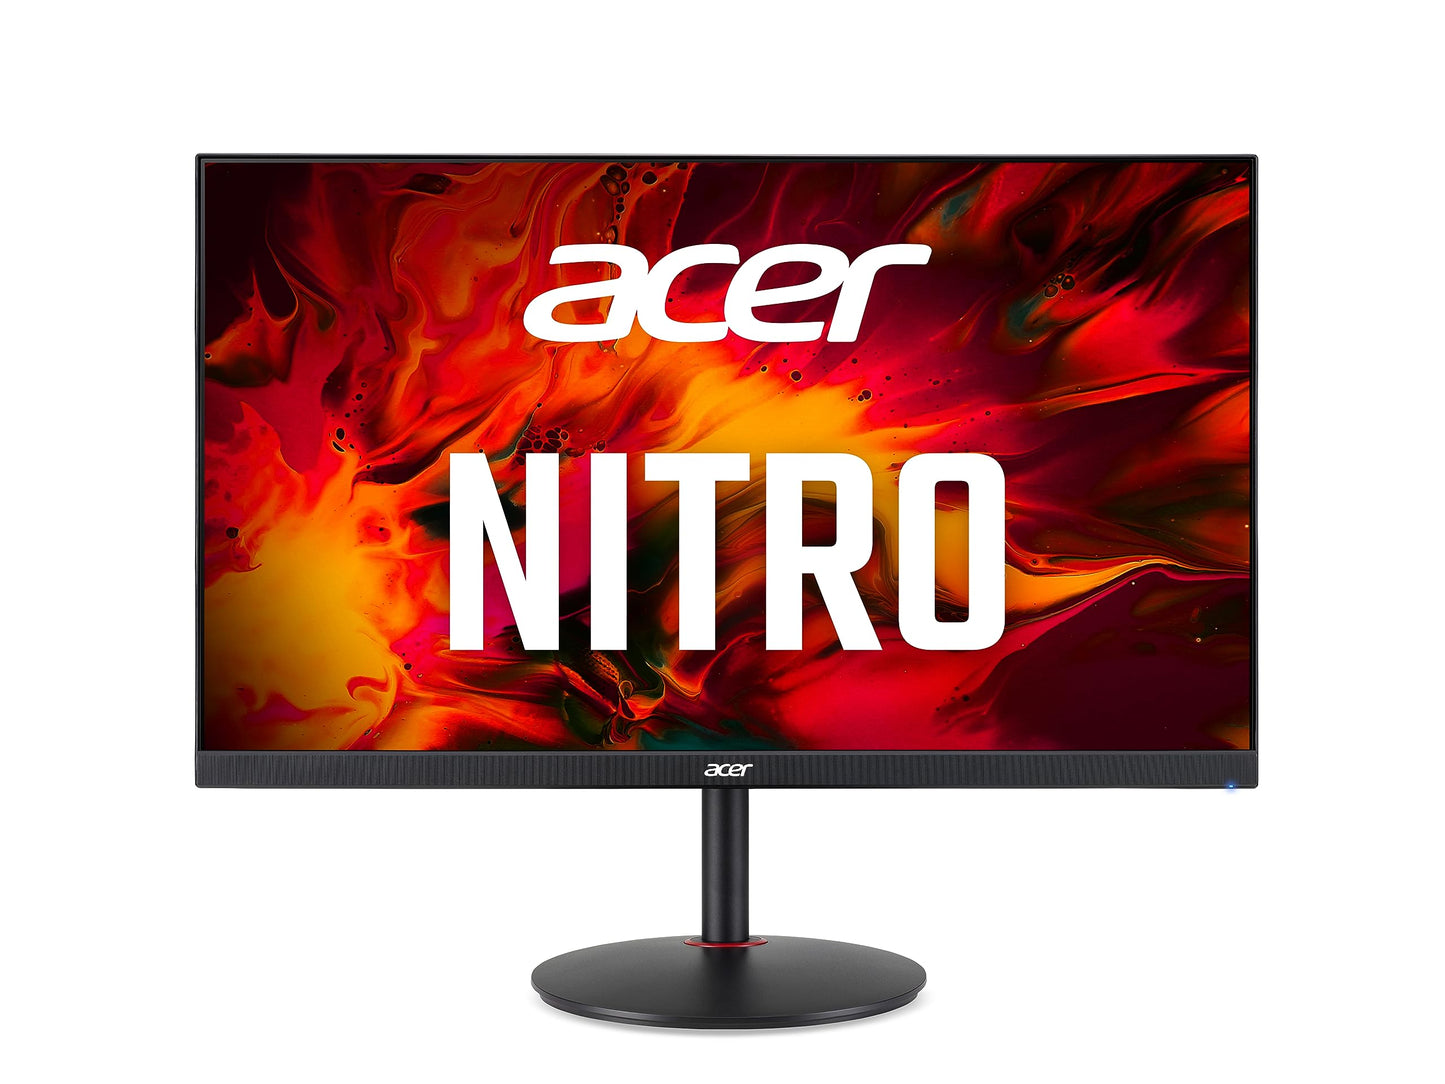 Acer Nitro 27" WQHD 2560 x 1440 PC Gaming IPS Monitor | AMD FreeSync Premium | Up to 180Hz Refresh | Up to 0.5ms | DCI-P3 95% | 1 x Display Port 1.2 & 2 x HDMI 2.0 | XV271U M3bmiiprx - CaveHubs